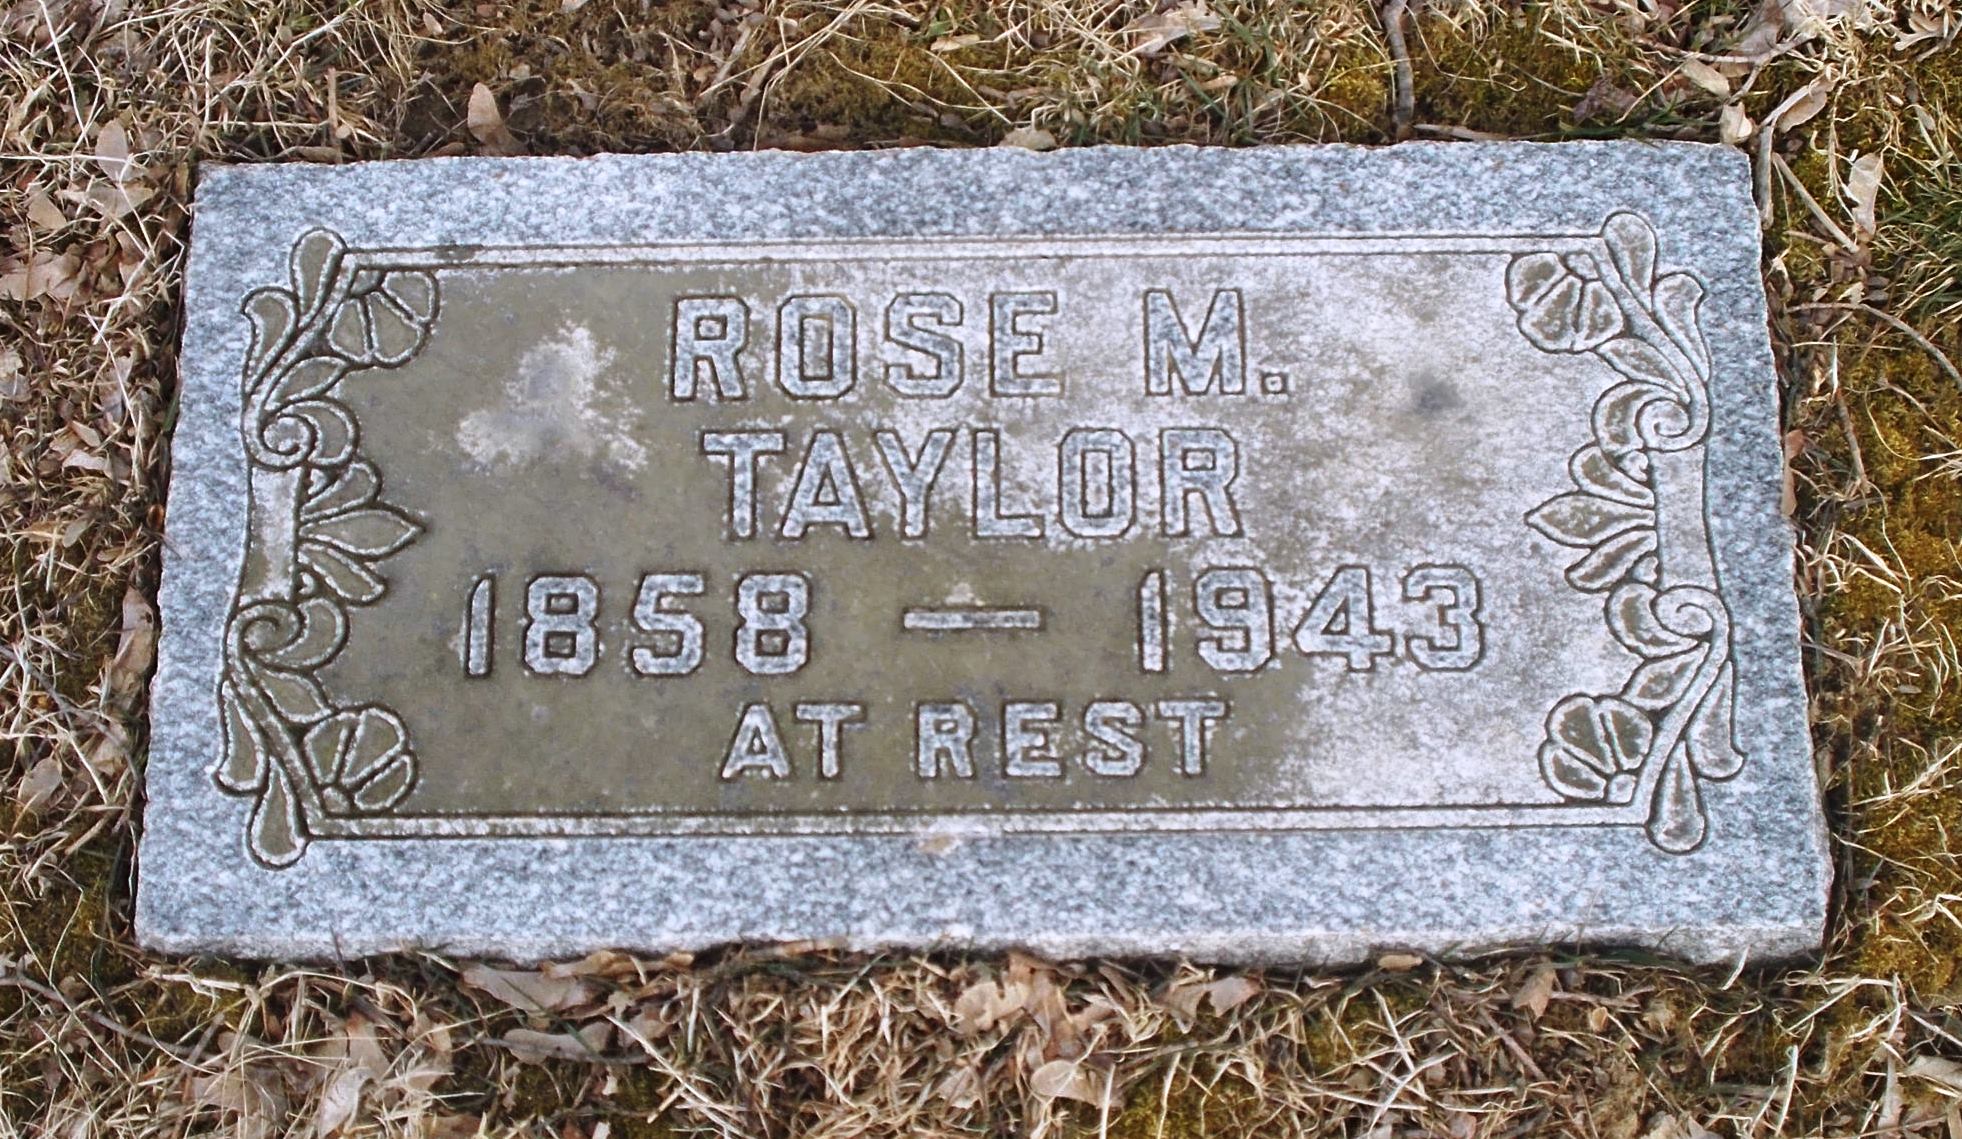 Rose M Taylor